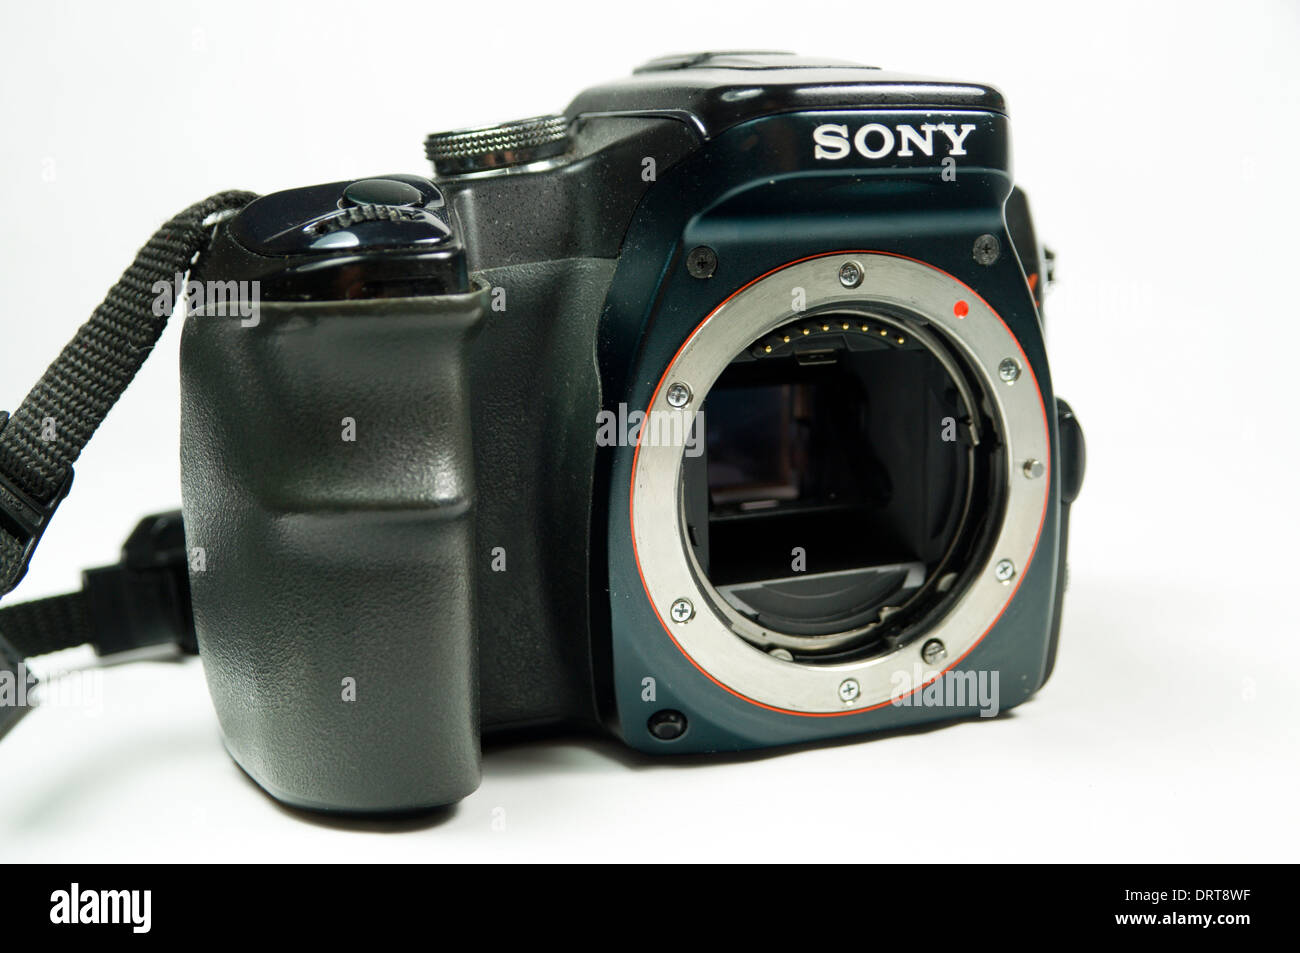 Sony Alpha 100 digital SLR camera body. Stock Photo